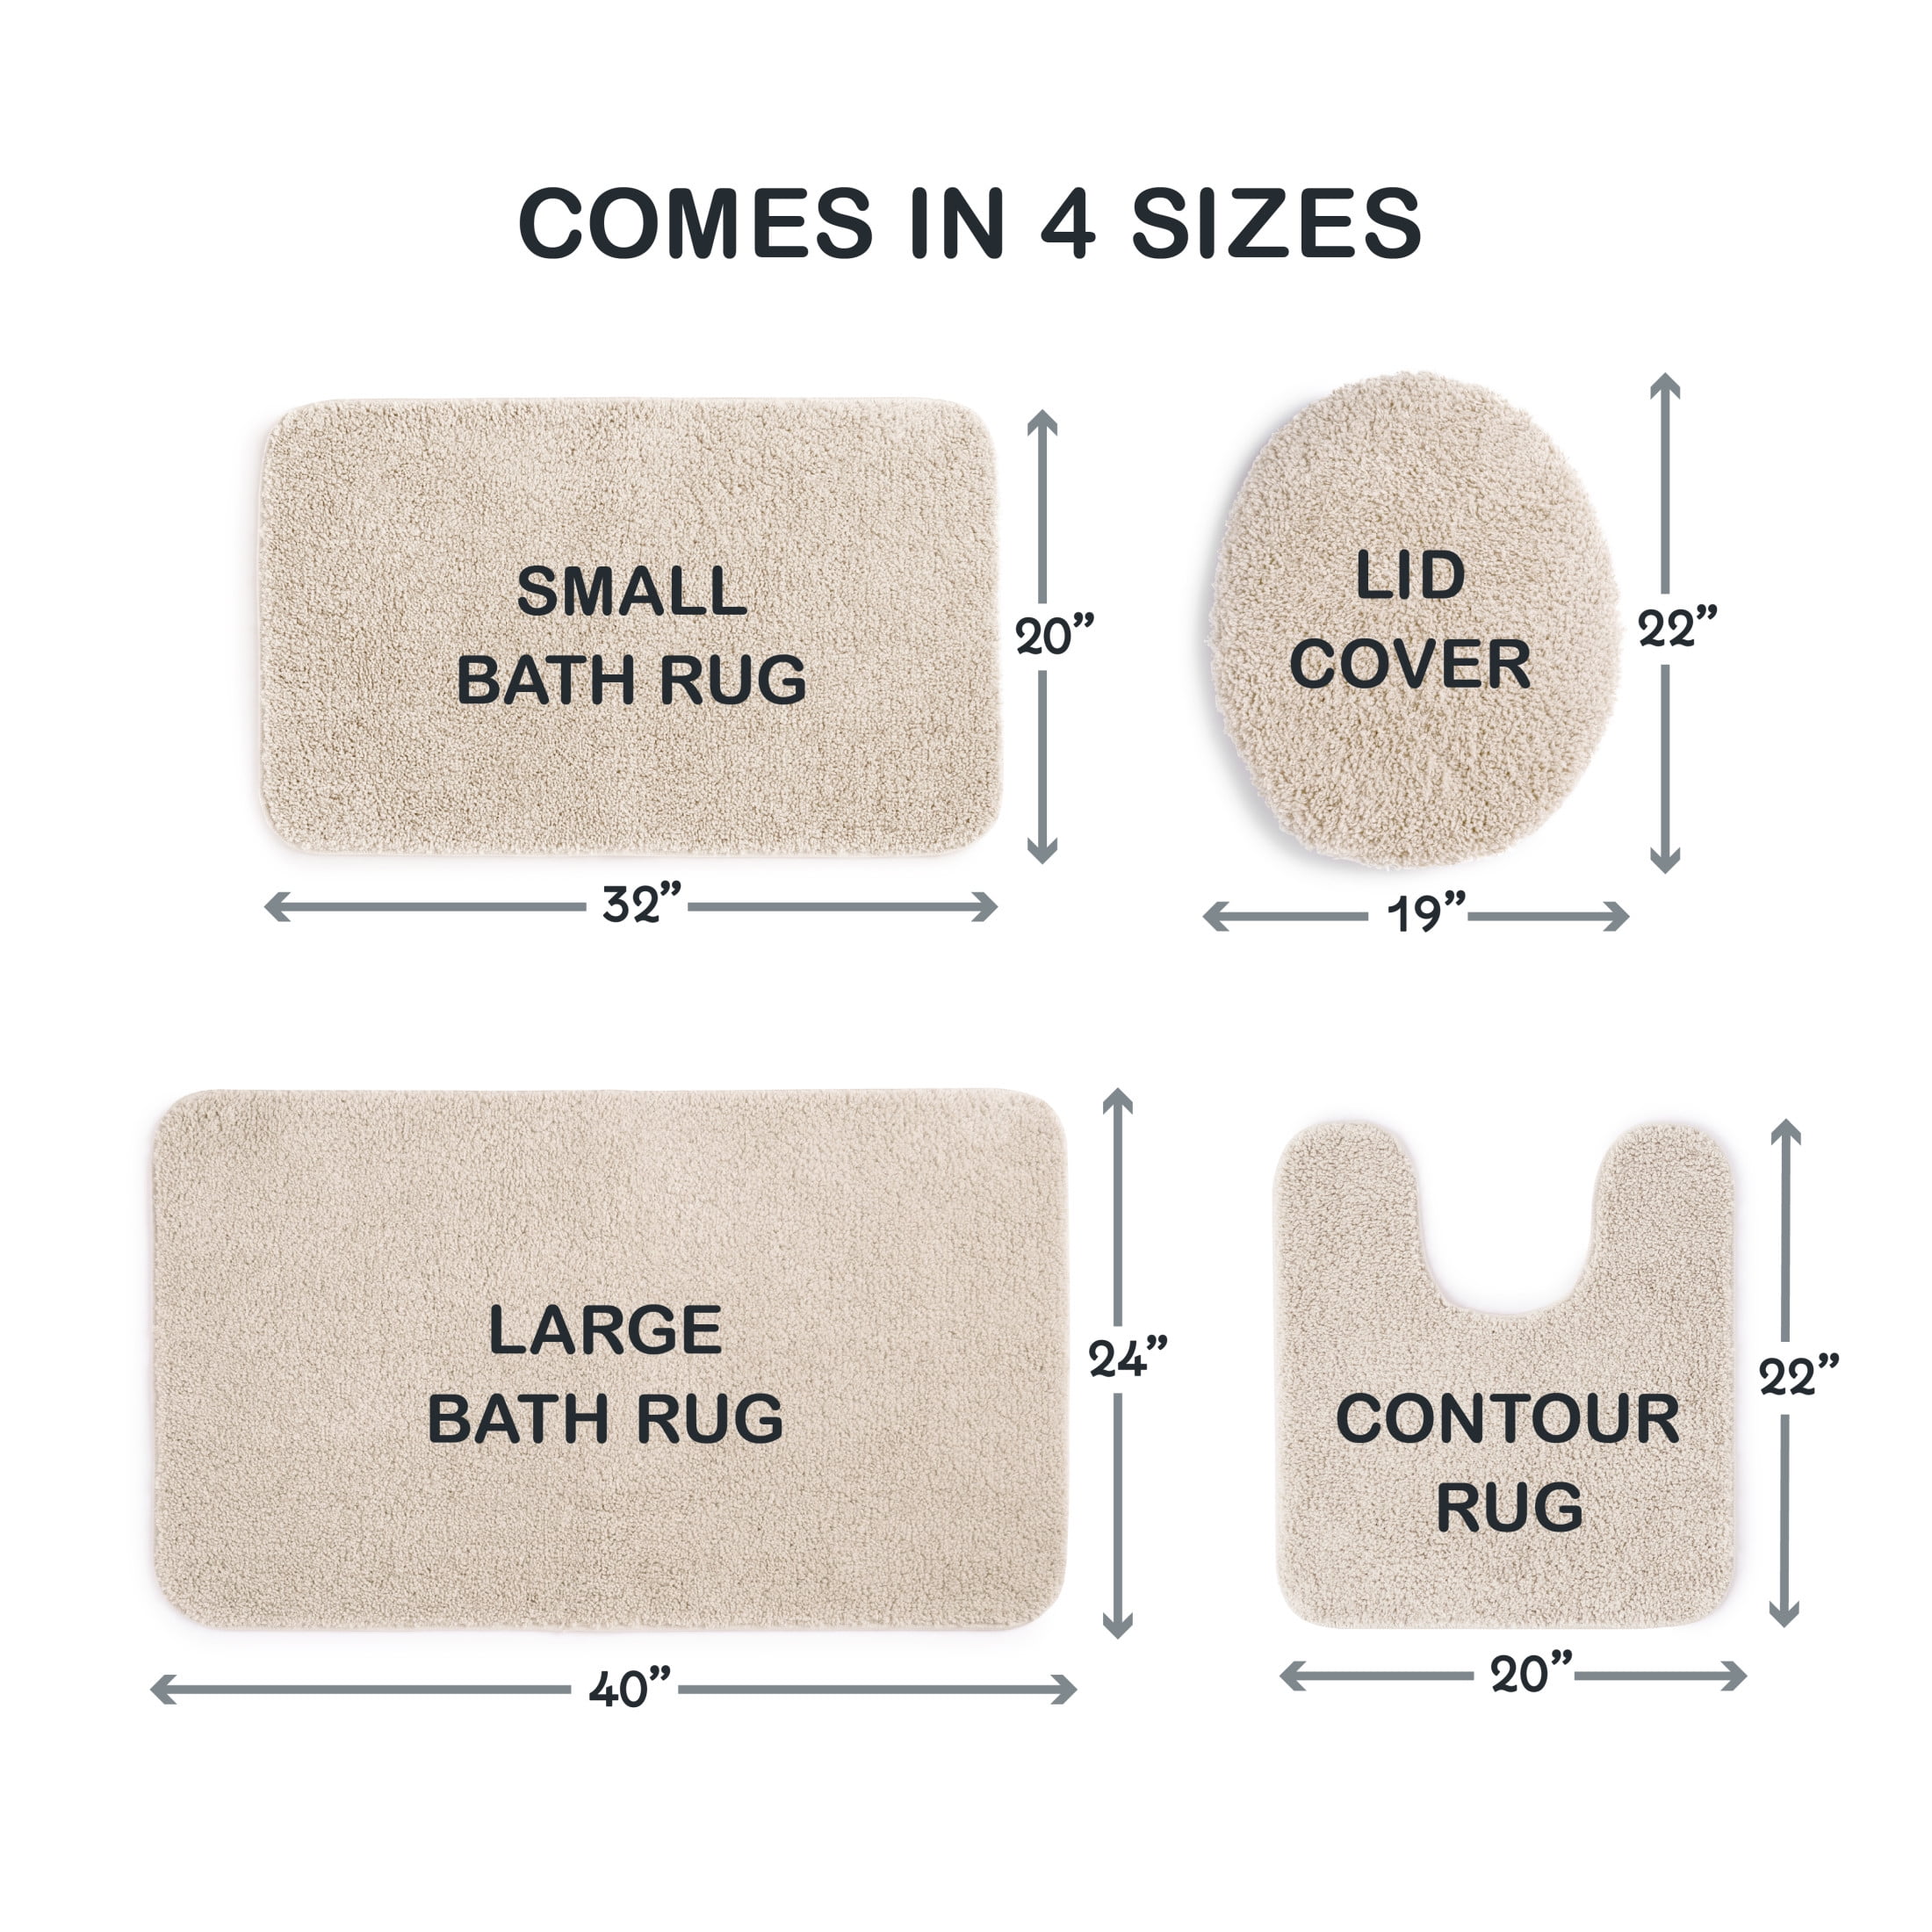 Mainstays Basic 3 Piece Polyester Bath Rug Set, 20 inch x 32 inch Rug, Contour, Lid - Light School Grey, Size: 3 Piece (20 inchx32 inch, Contour, Lid)